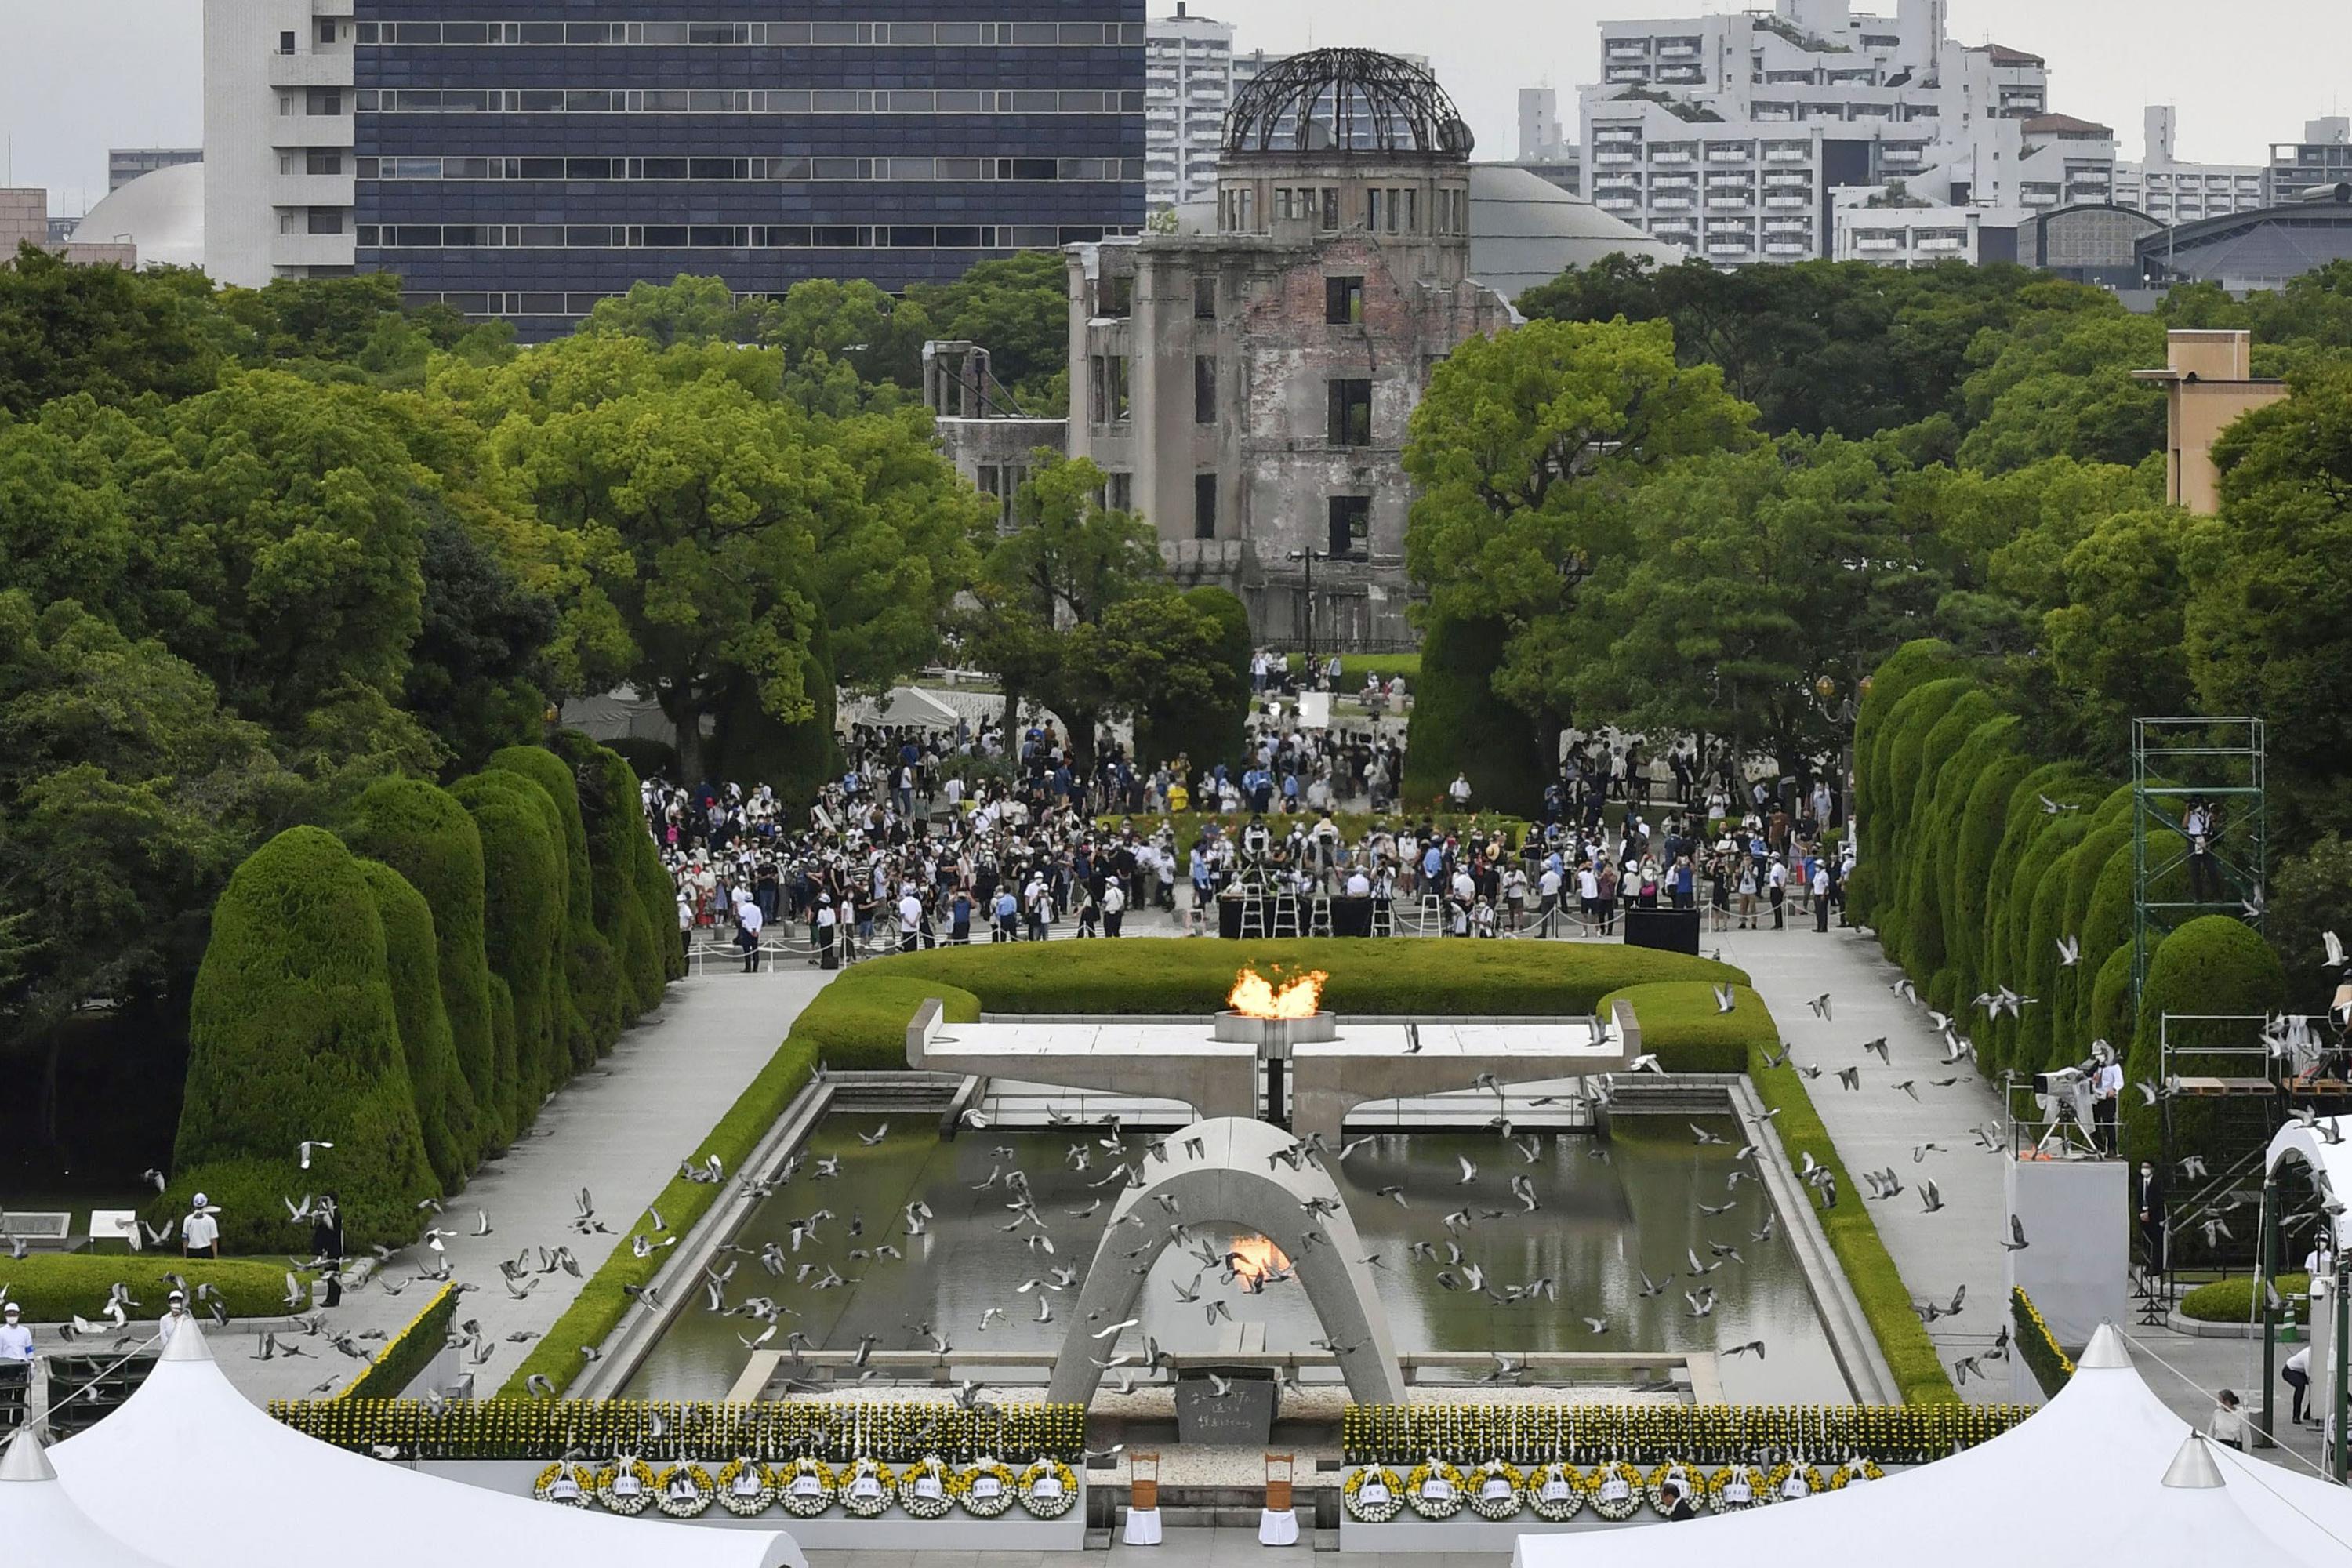 Hiroshima vows nuke ban at 77th memorial amid Russia threat - The Associated Press